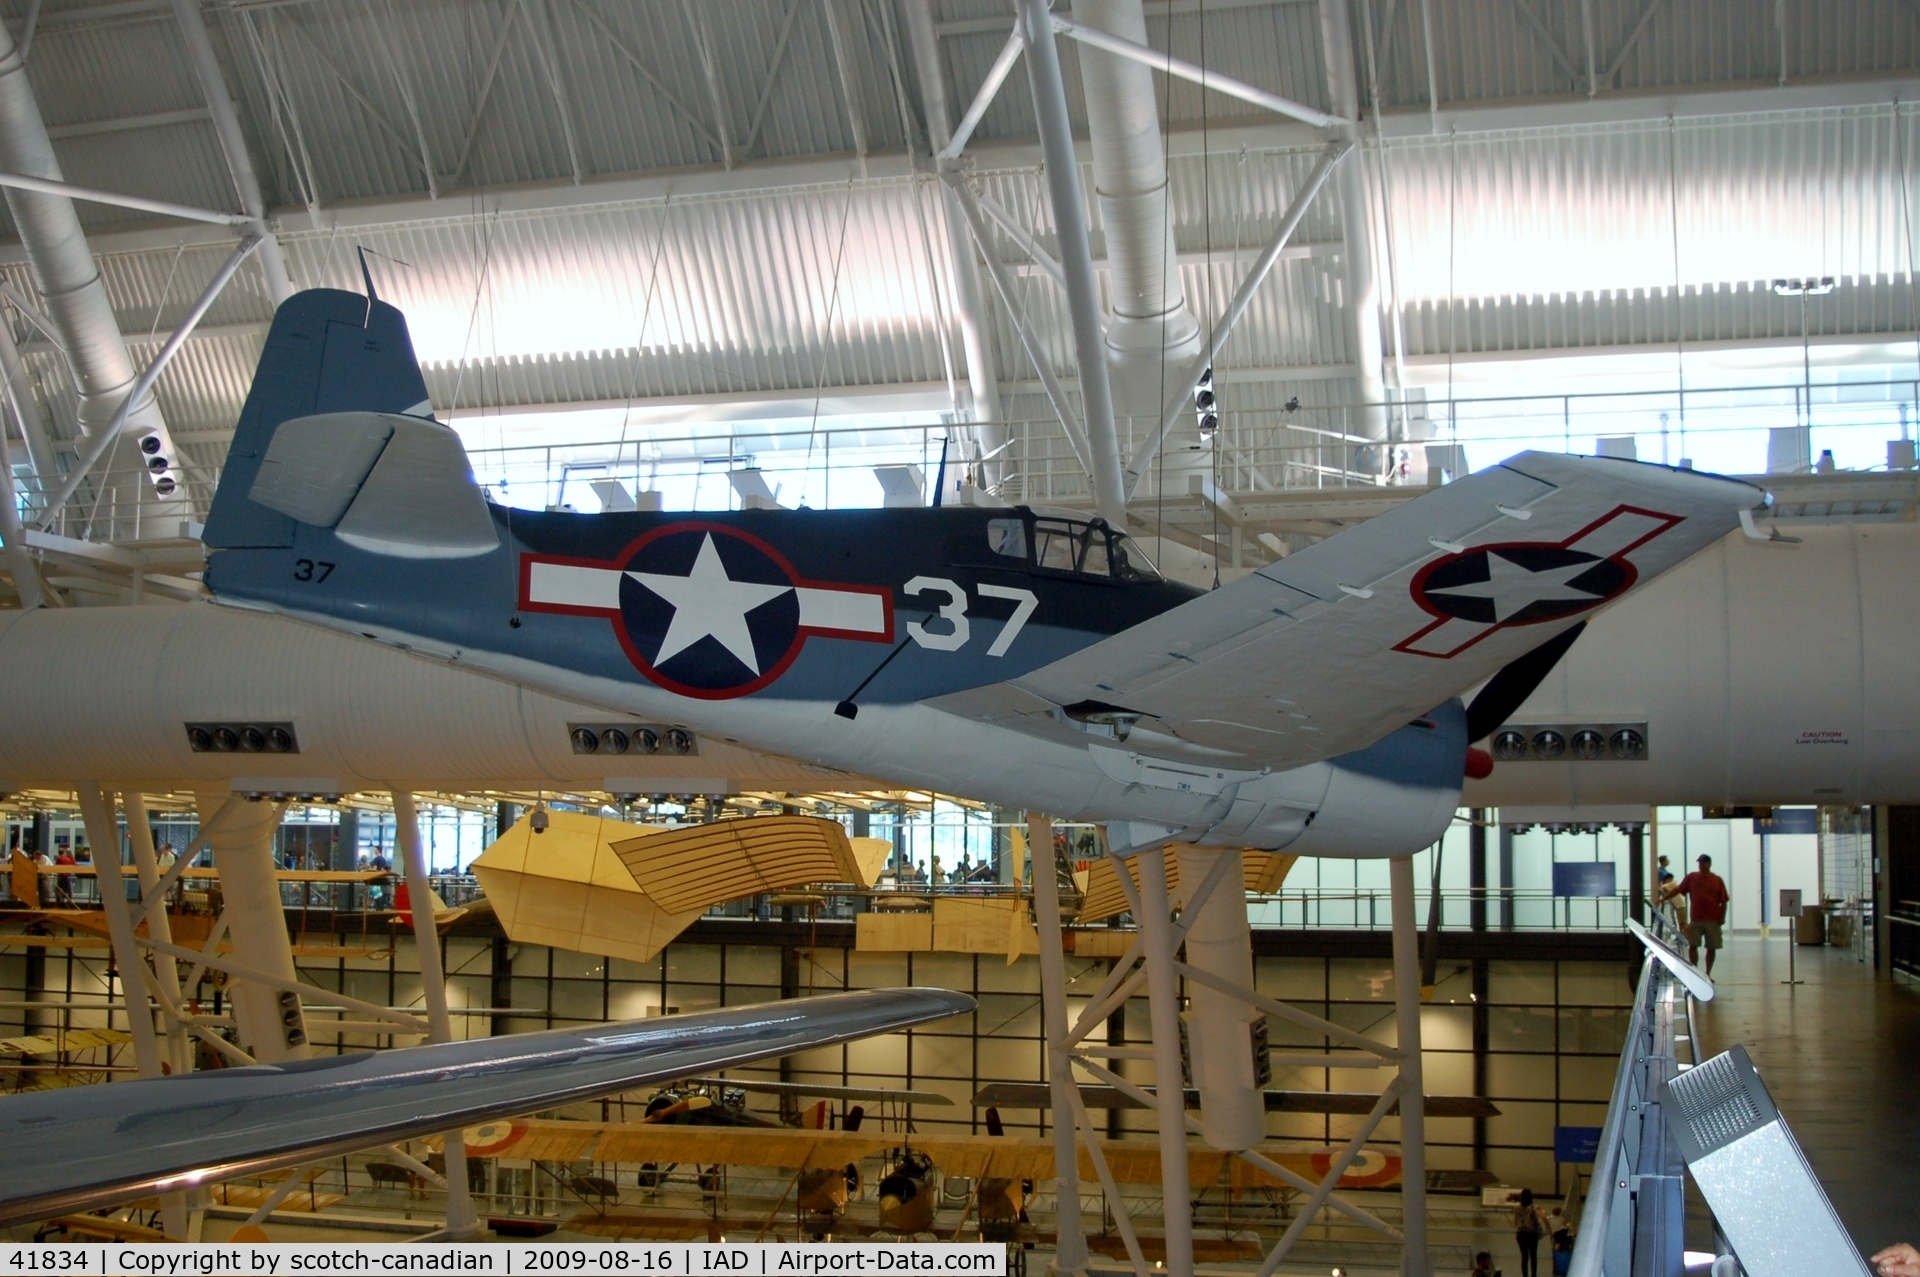 41834, Grumman F6F-3K Hellcat C/N A-3100, Grumman F6F-3K Hellcat at the Steven F. Udvar-Hazy Center, Smithsonian National Air and Space Museum, Chantilly, VA